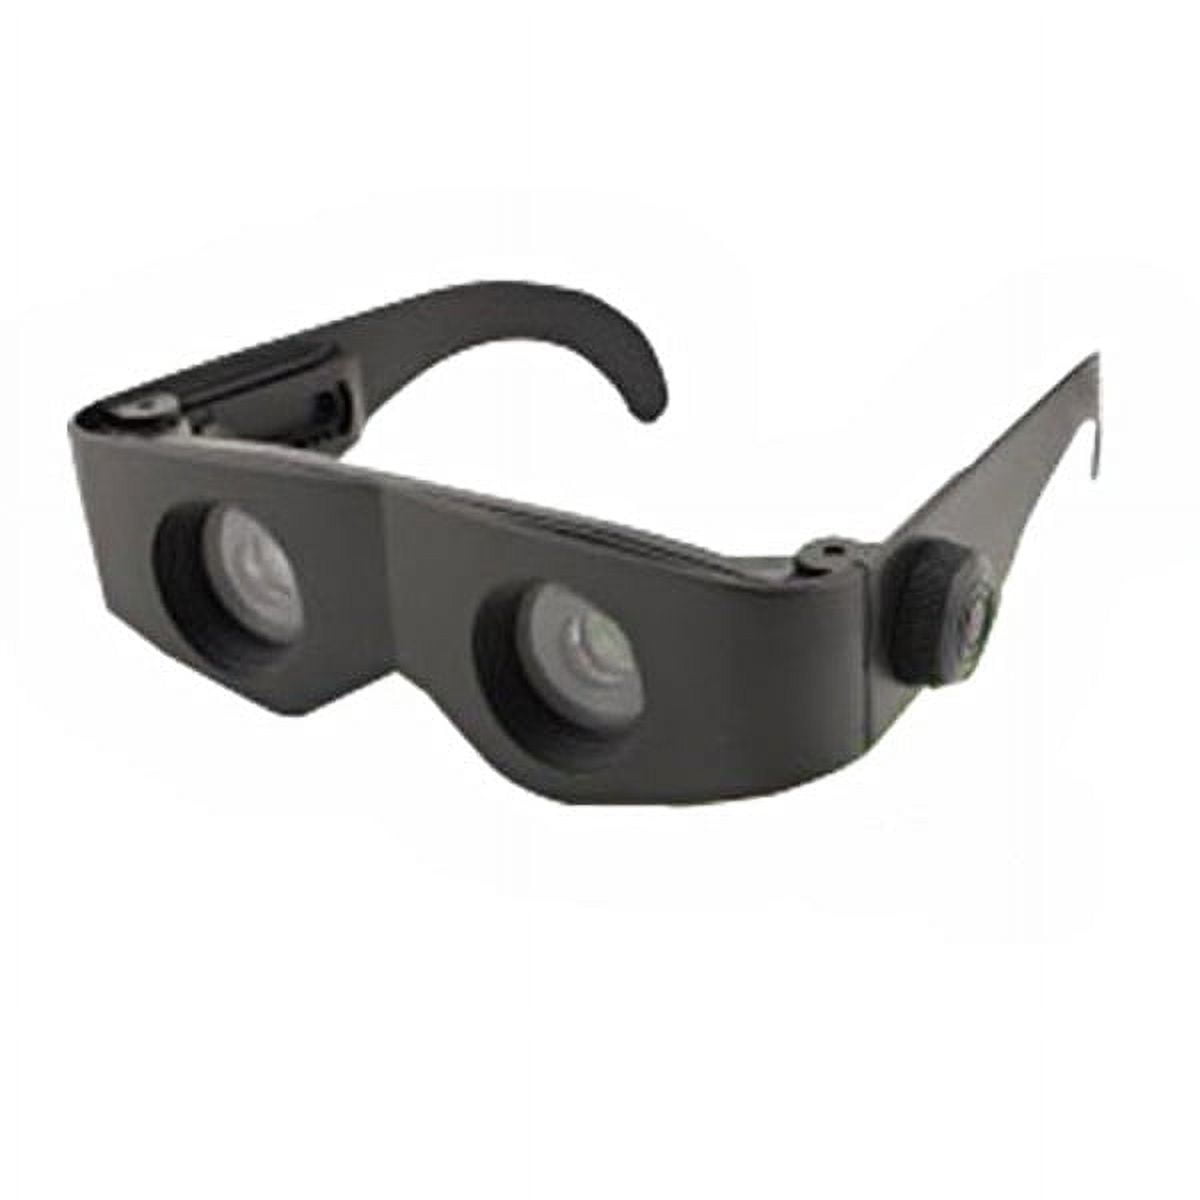 Donegan DA-7 OptiVISOR Headband Magnifier, 2.75X Magnification Glass Lens Plate, 6 Focal Length